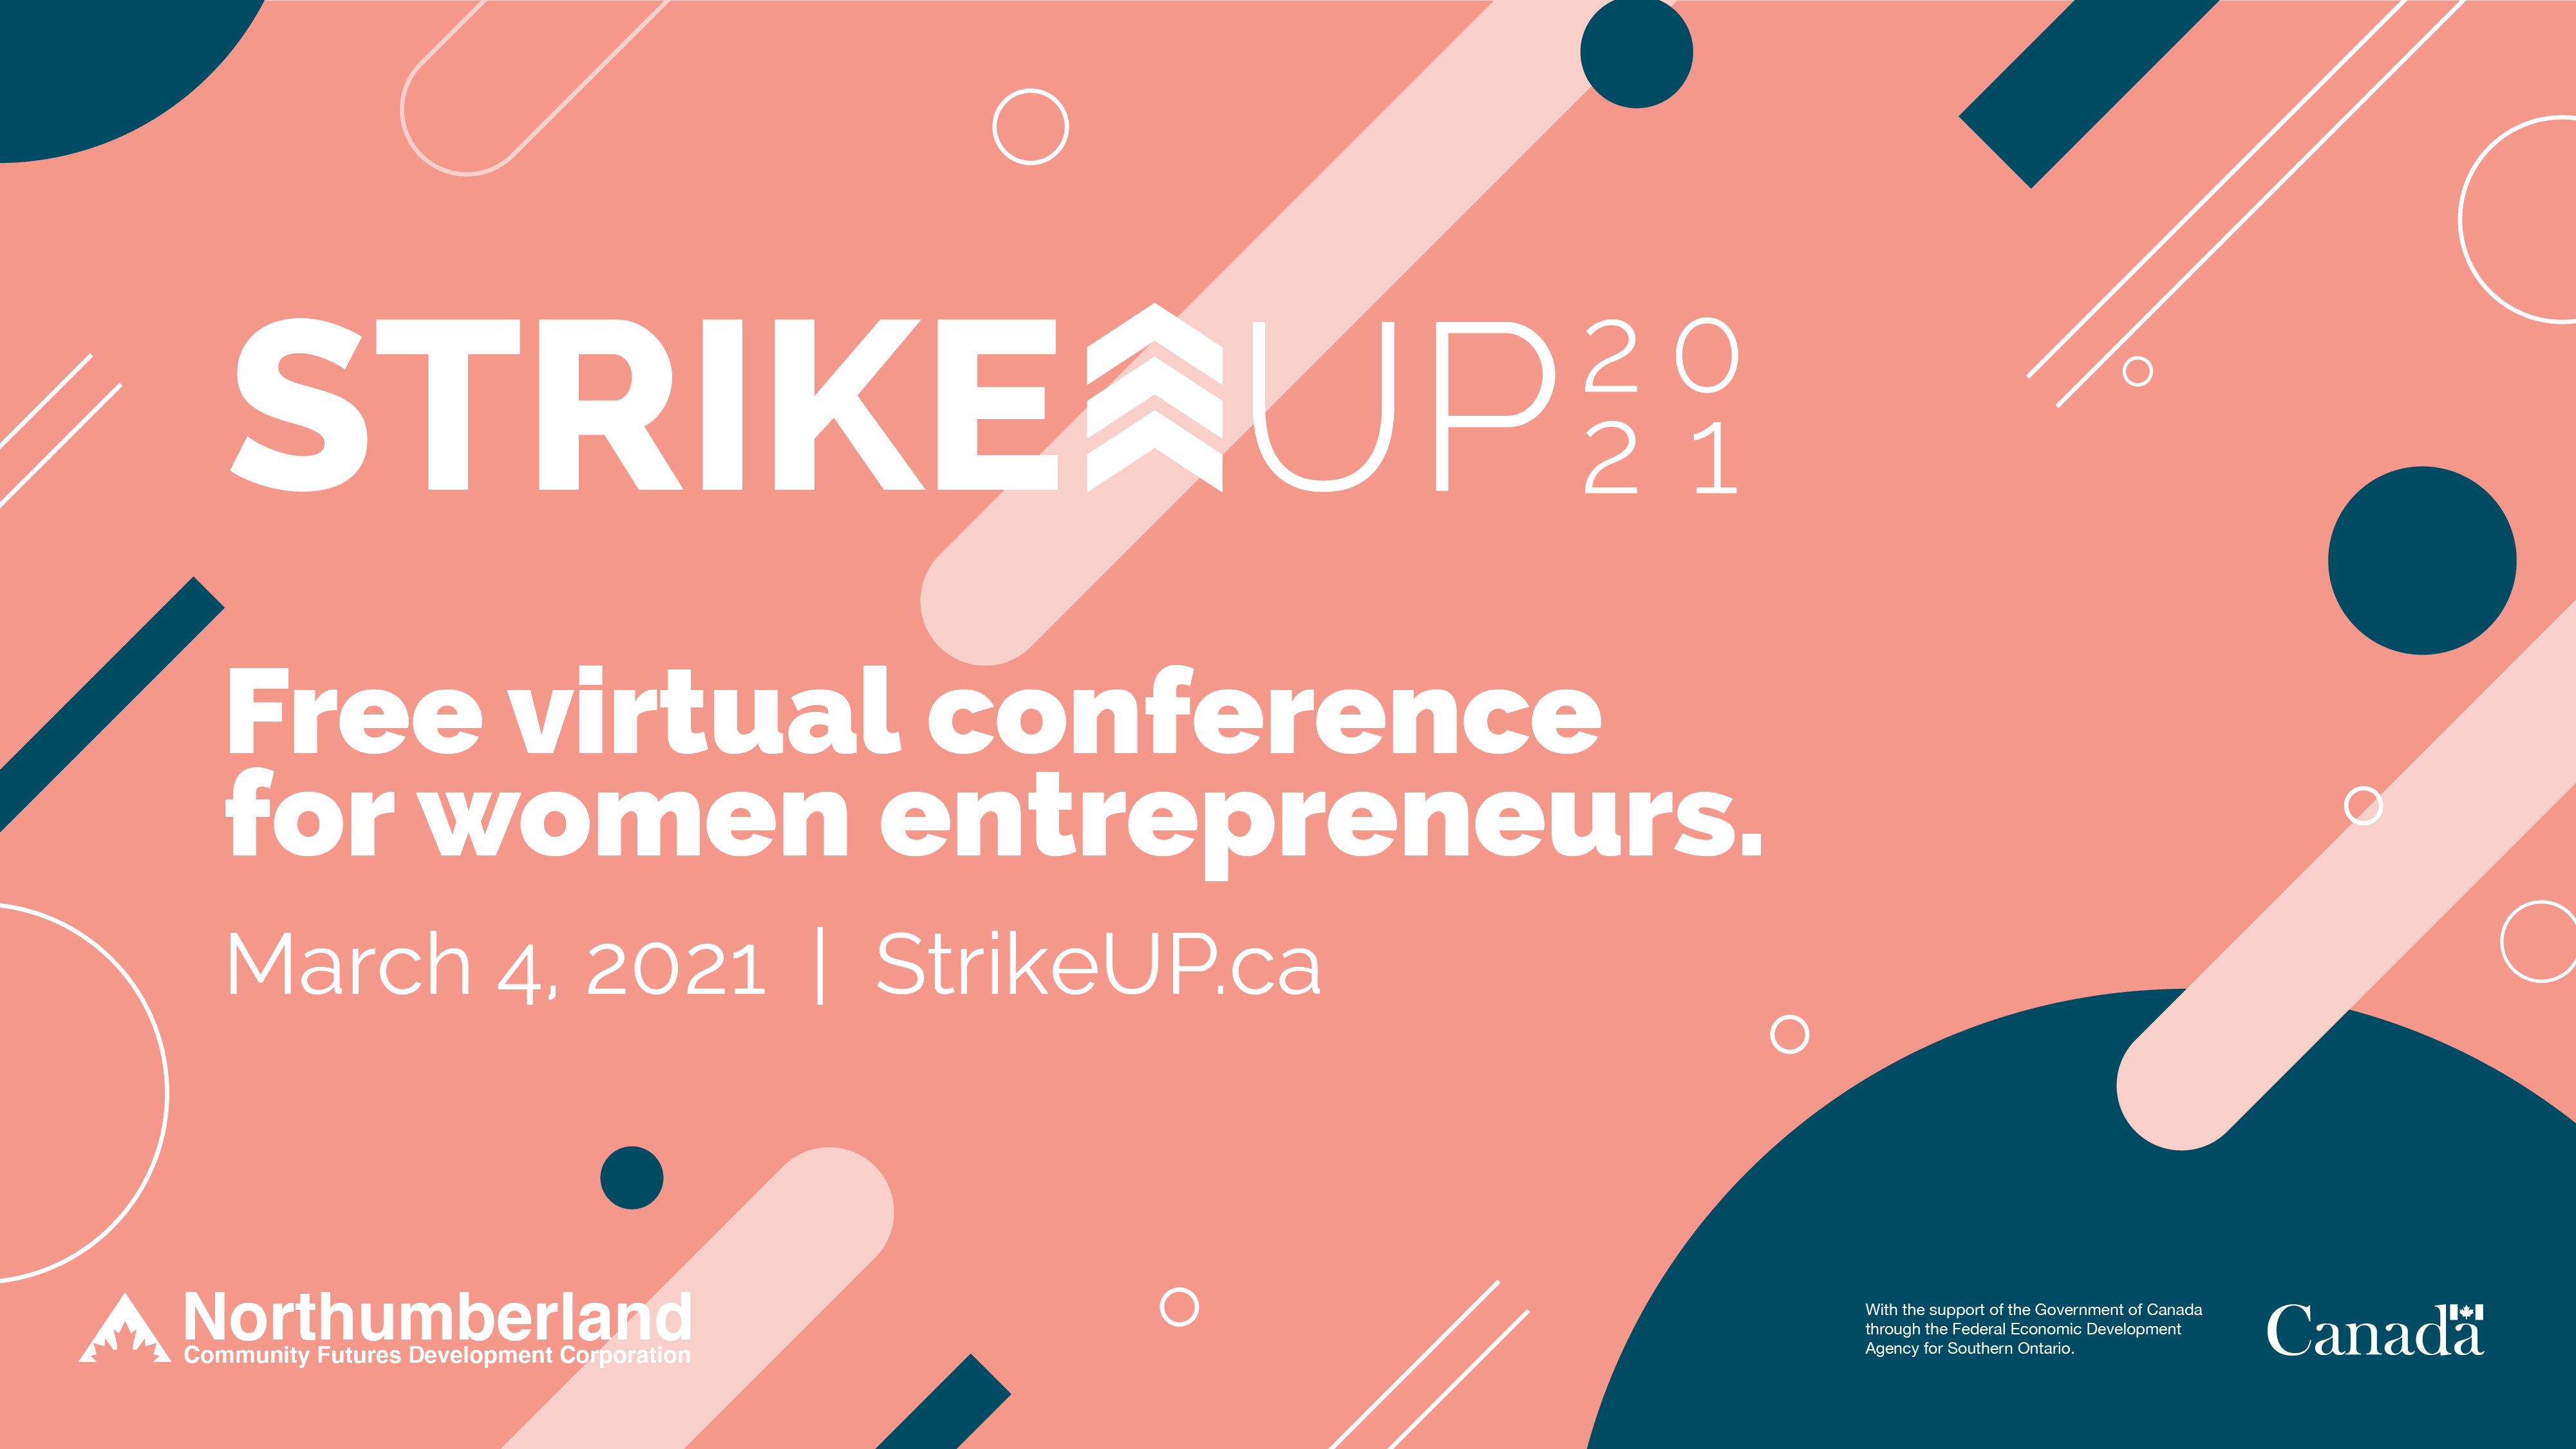 StrikeUP 2021 Digital Conference for Women Entrepreneurs on March 4